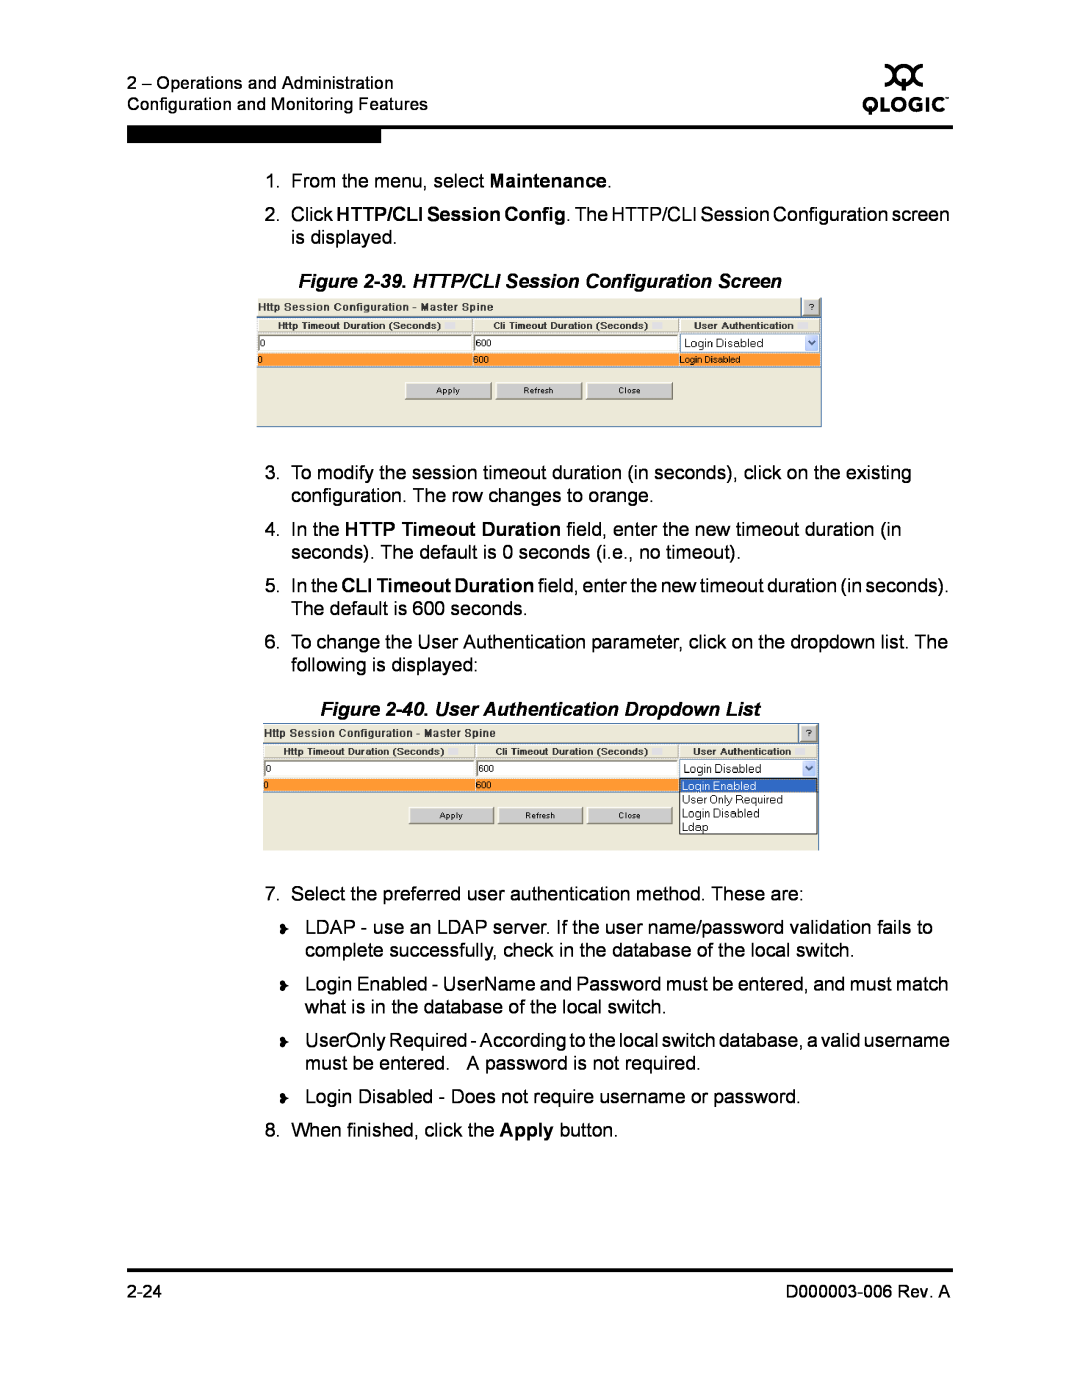 Q-Logic 9000 manual 39. HTTP/CLI Session Configuration Screen, 40. User Authentication Dropdown List 